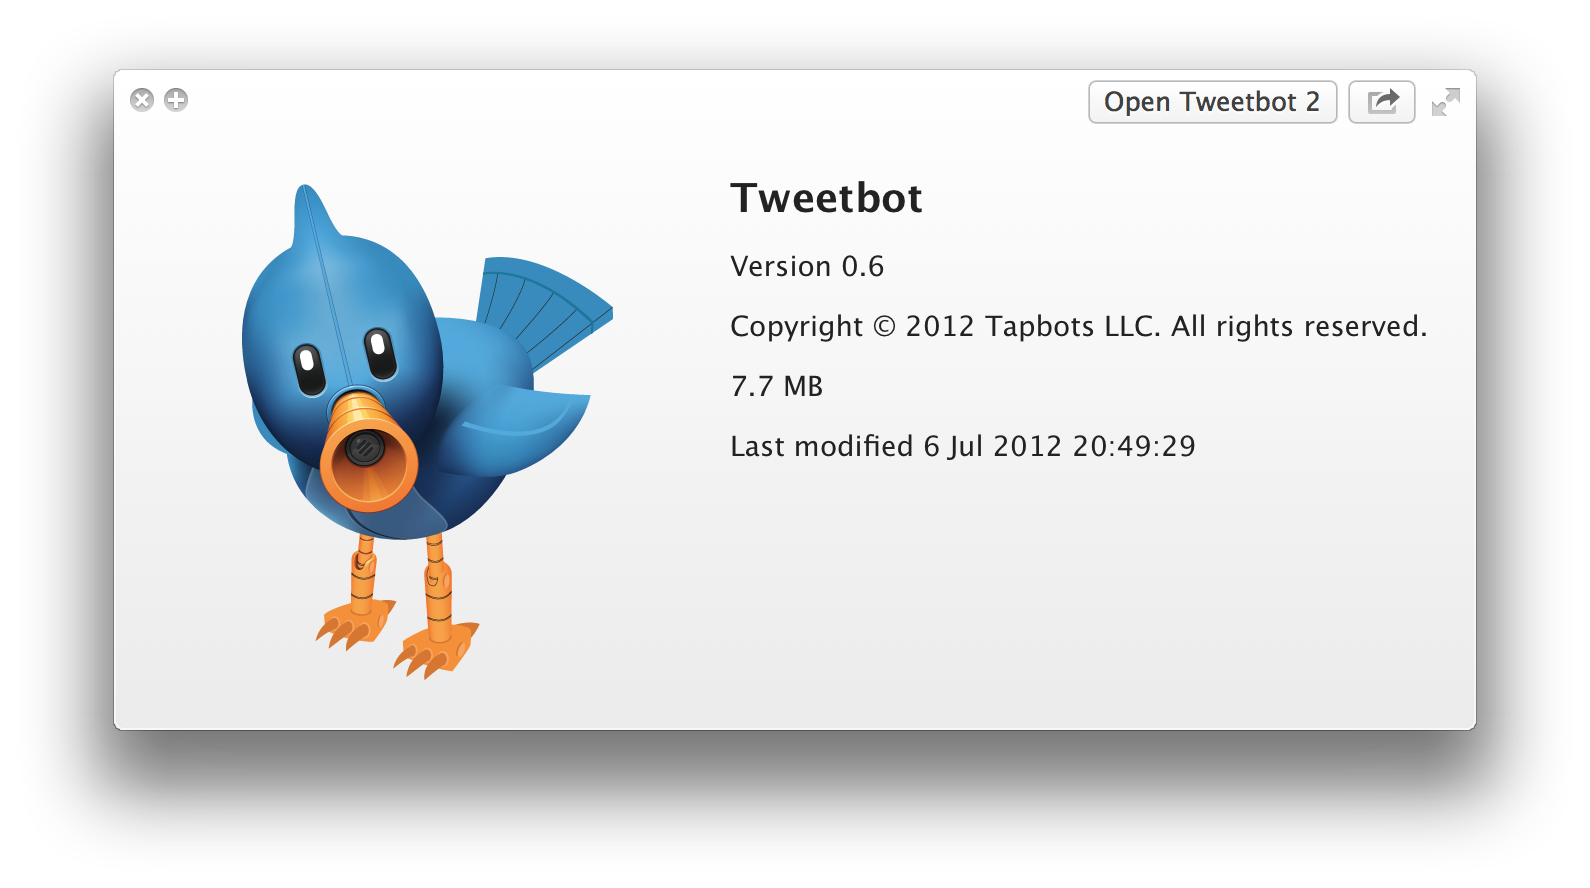 tweetdeck vs tweetbot